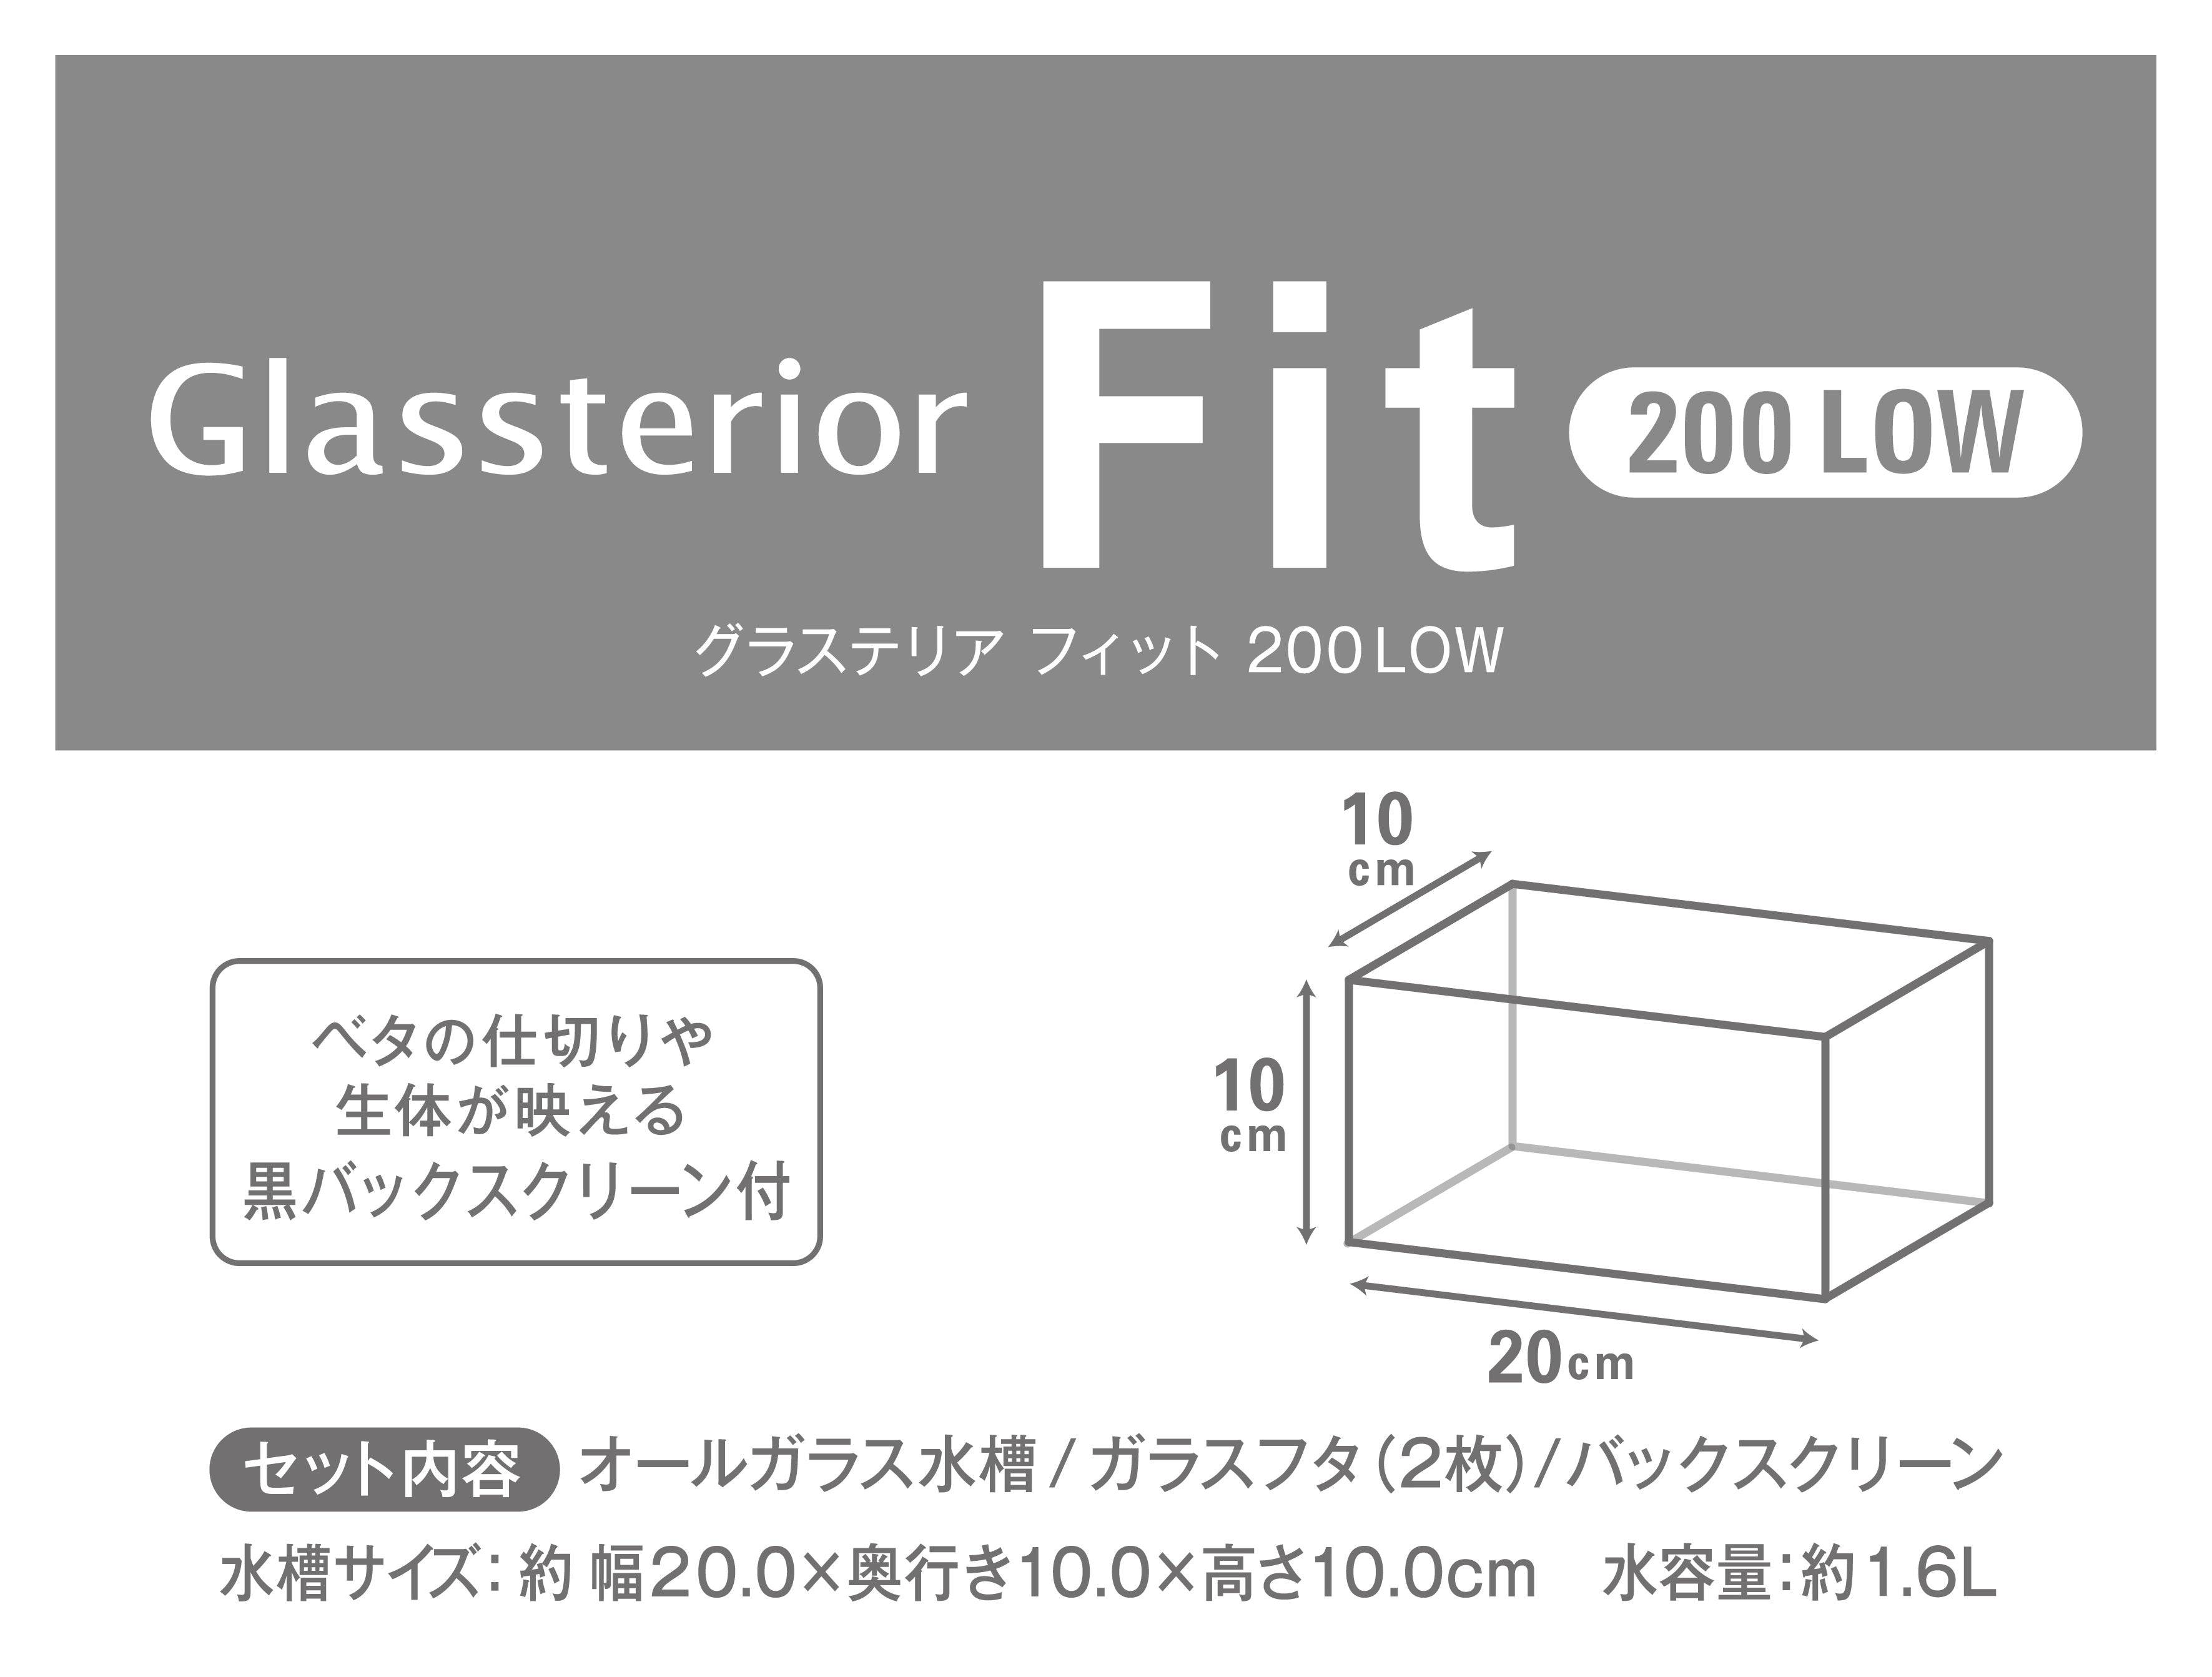 Gex Glassterior Fit 200LOW魚缸 (20X10X10cm) #8625